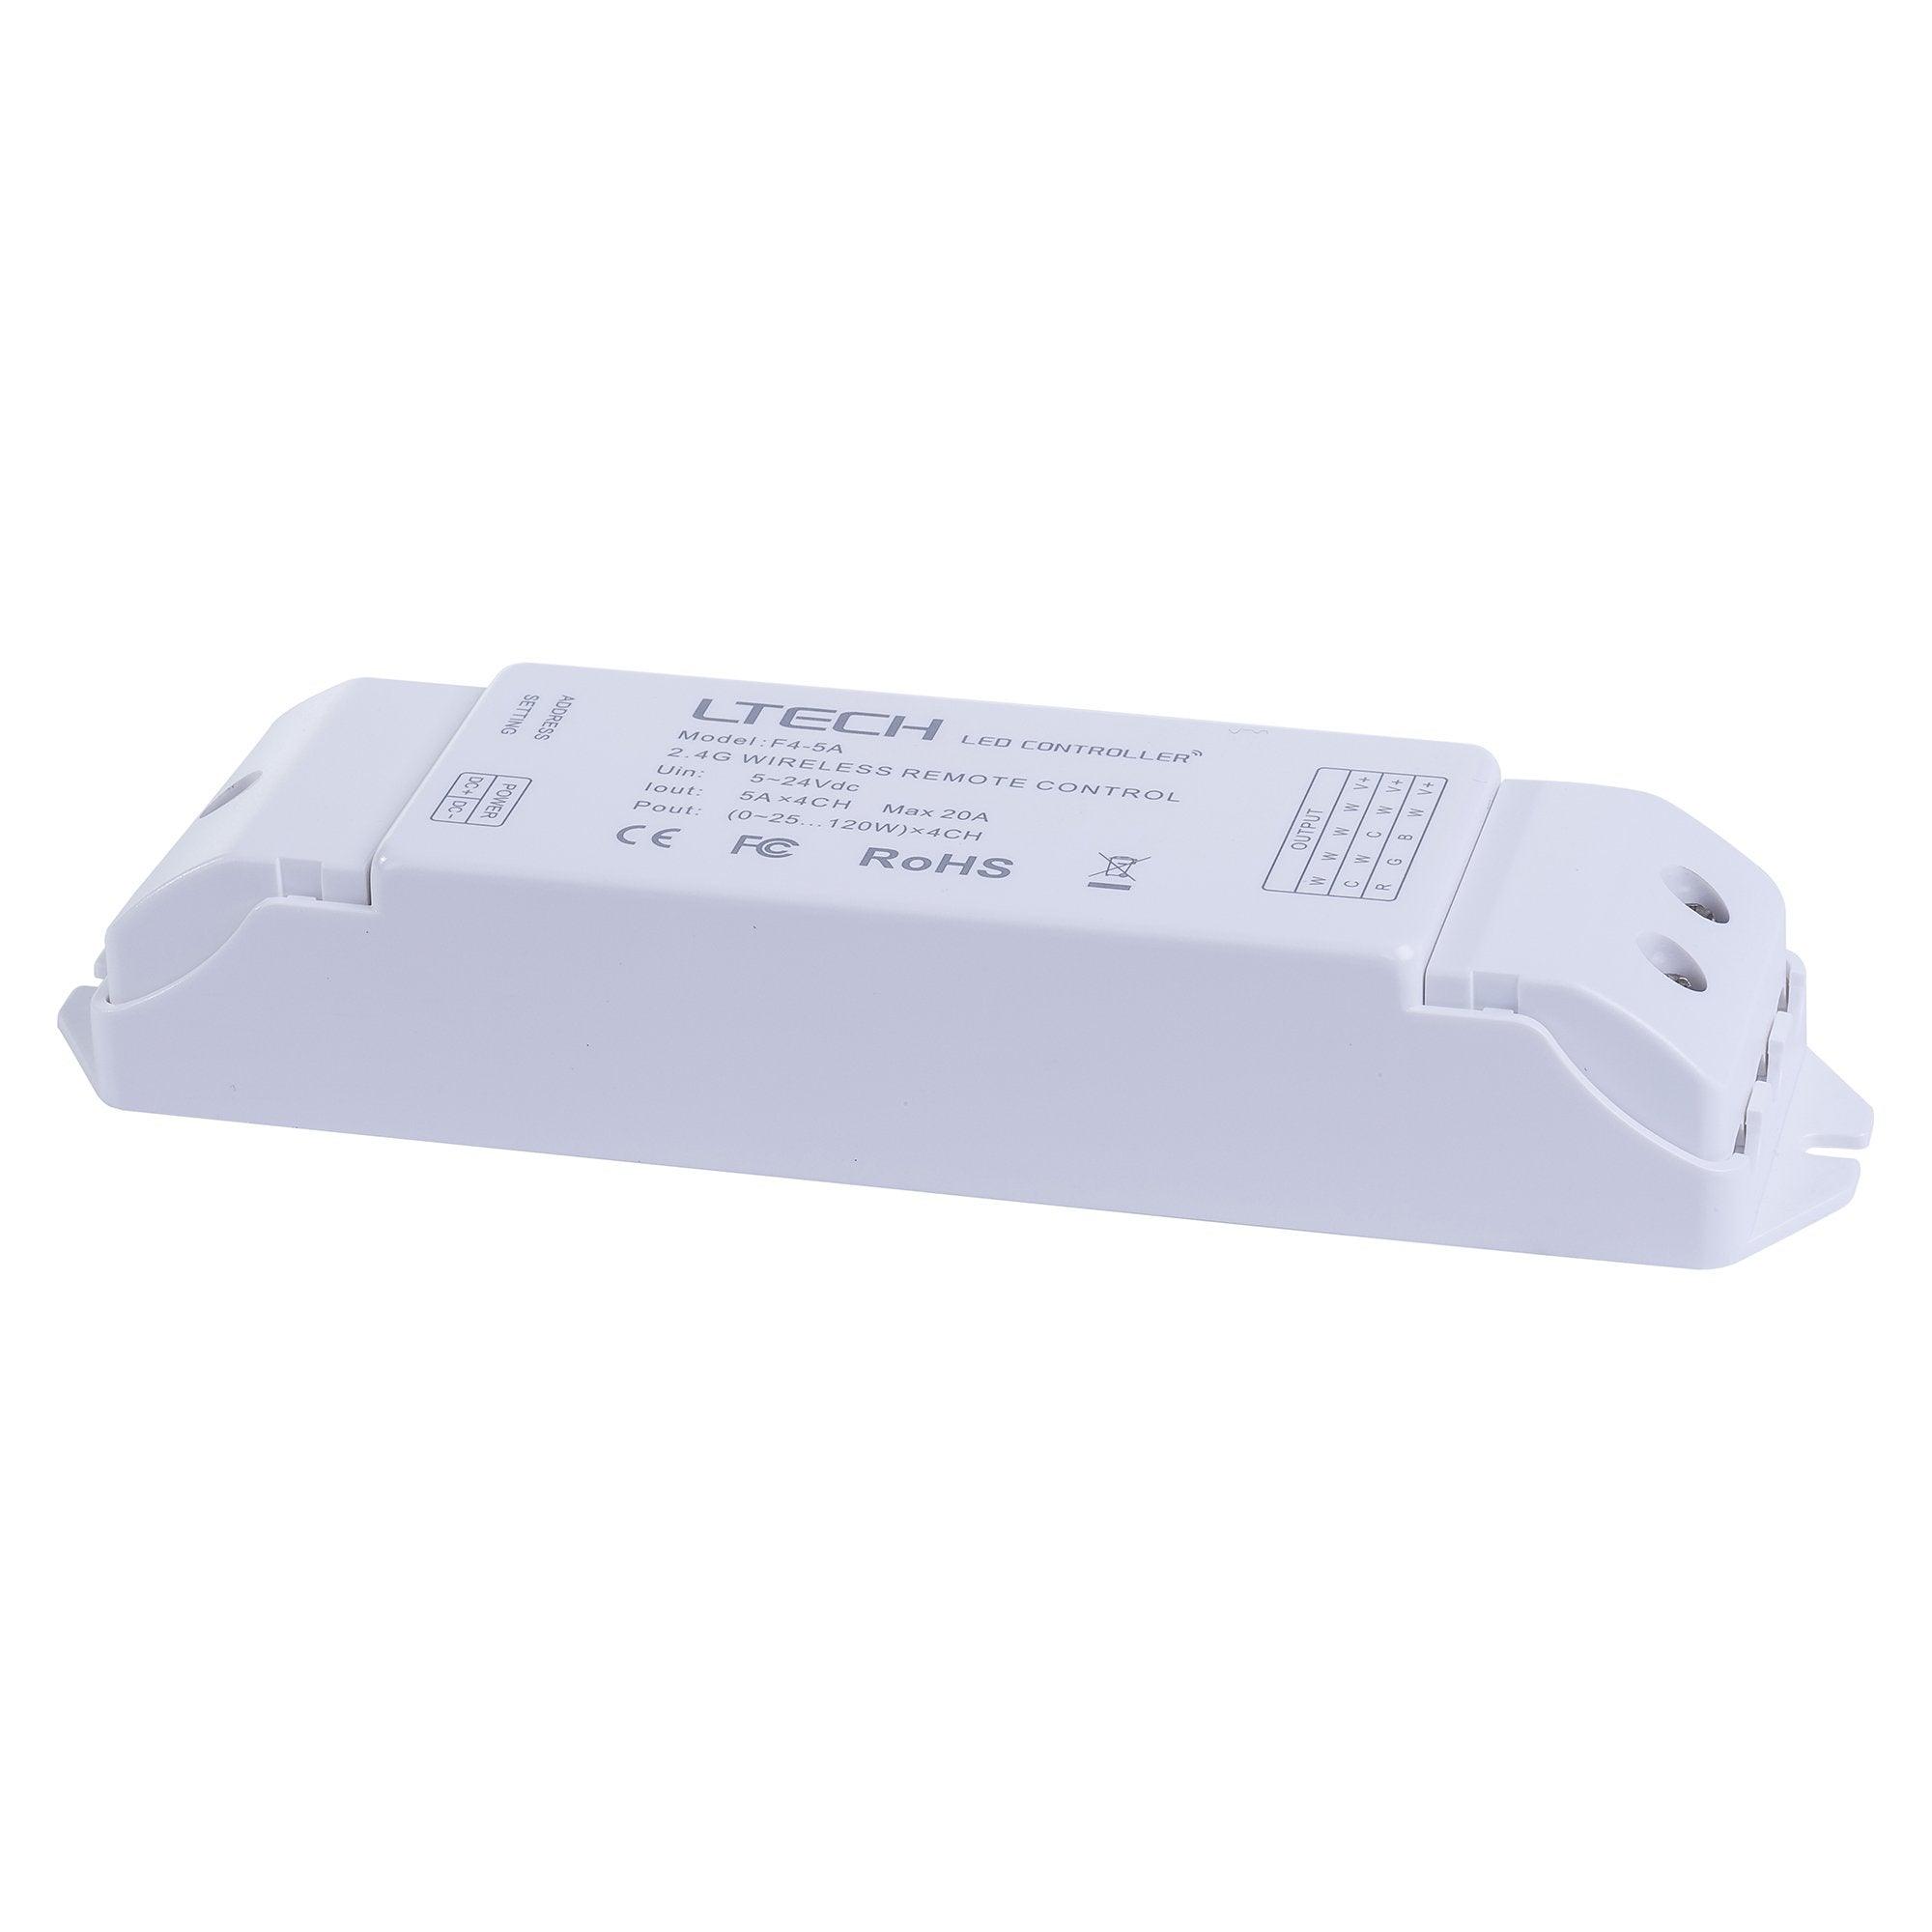 Havit Lighting LED Strip Controllers White LED Strip Receiver by Havit Lighting - HV9103-F4-5A Lights-For-You HV9103-F4-5A